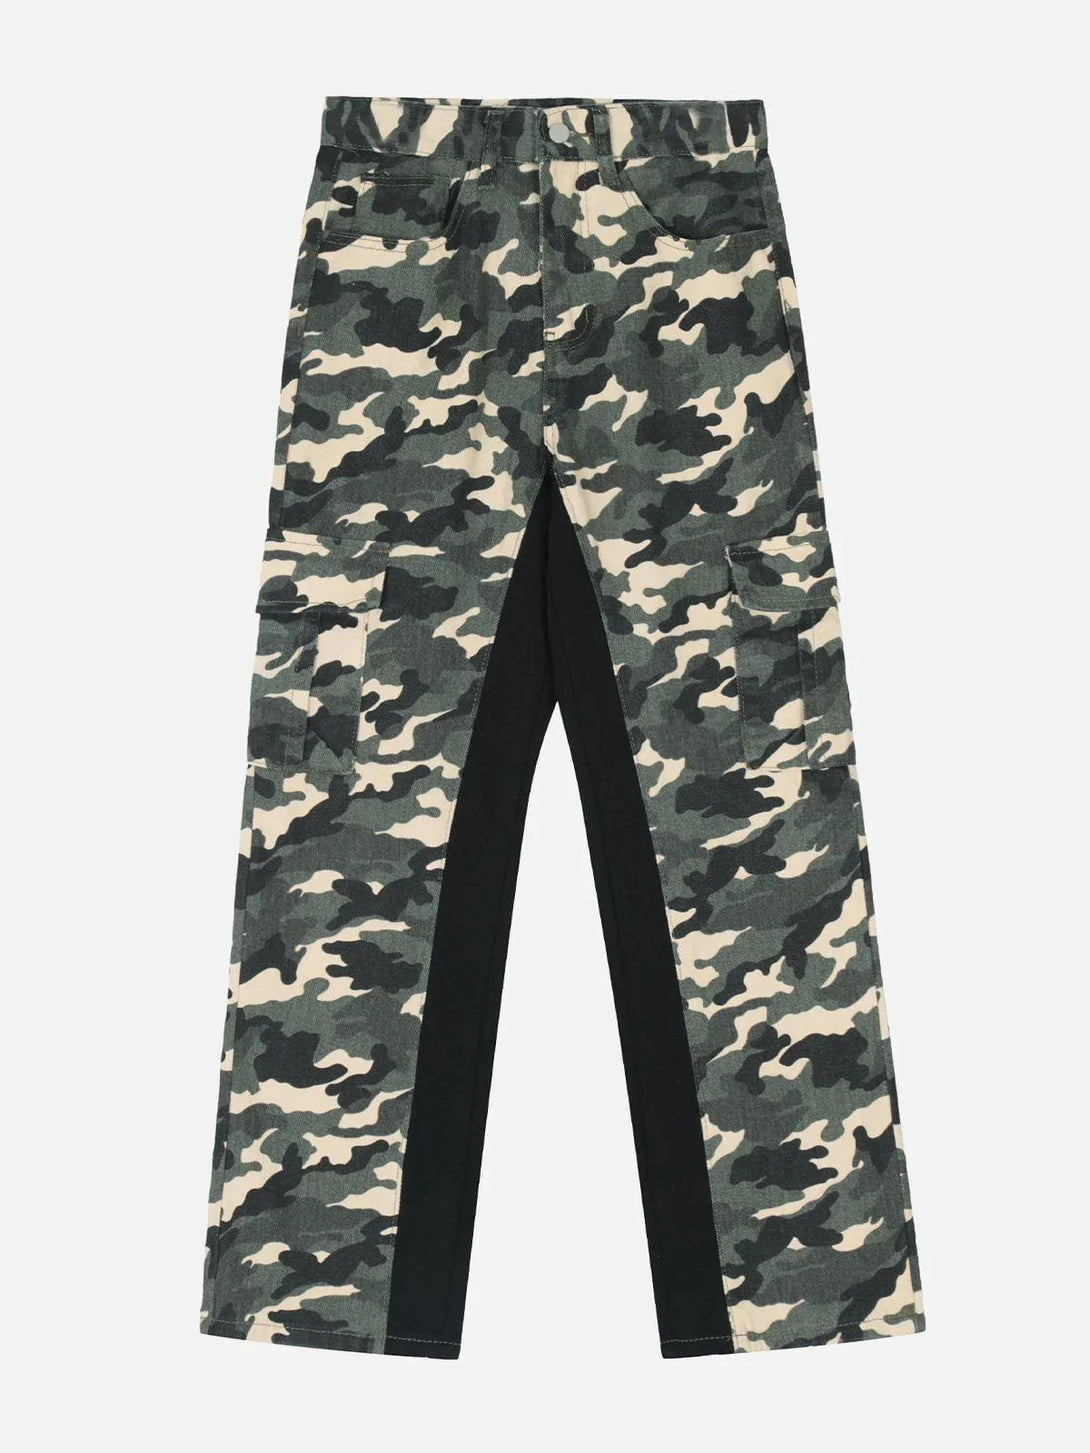 Majesda® - Splicing Camouflage Print Pants outfit ideas streetwear fashion